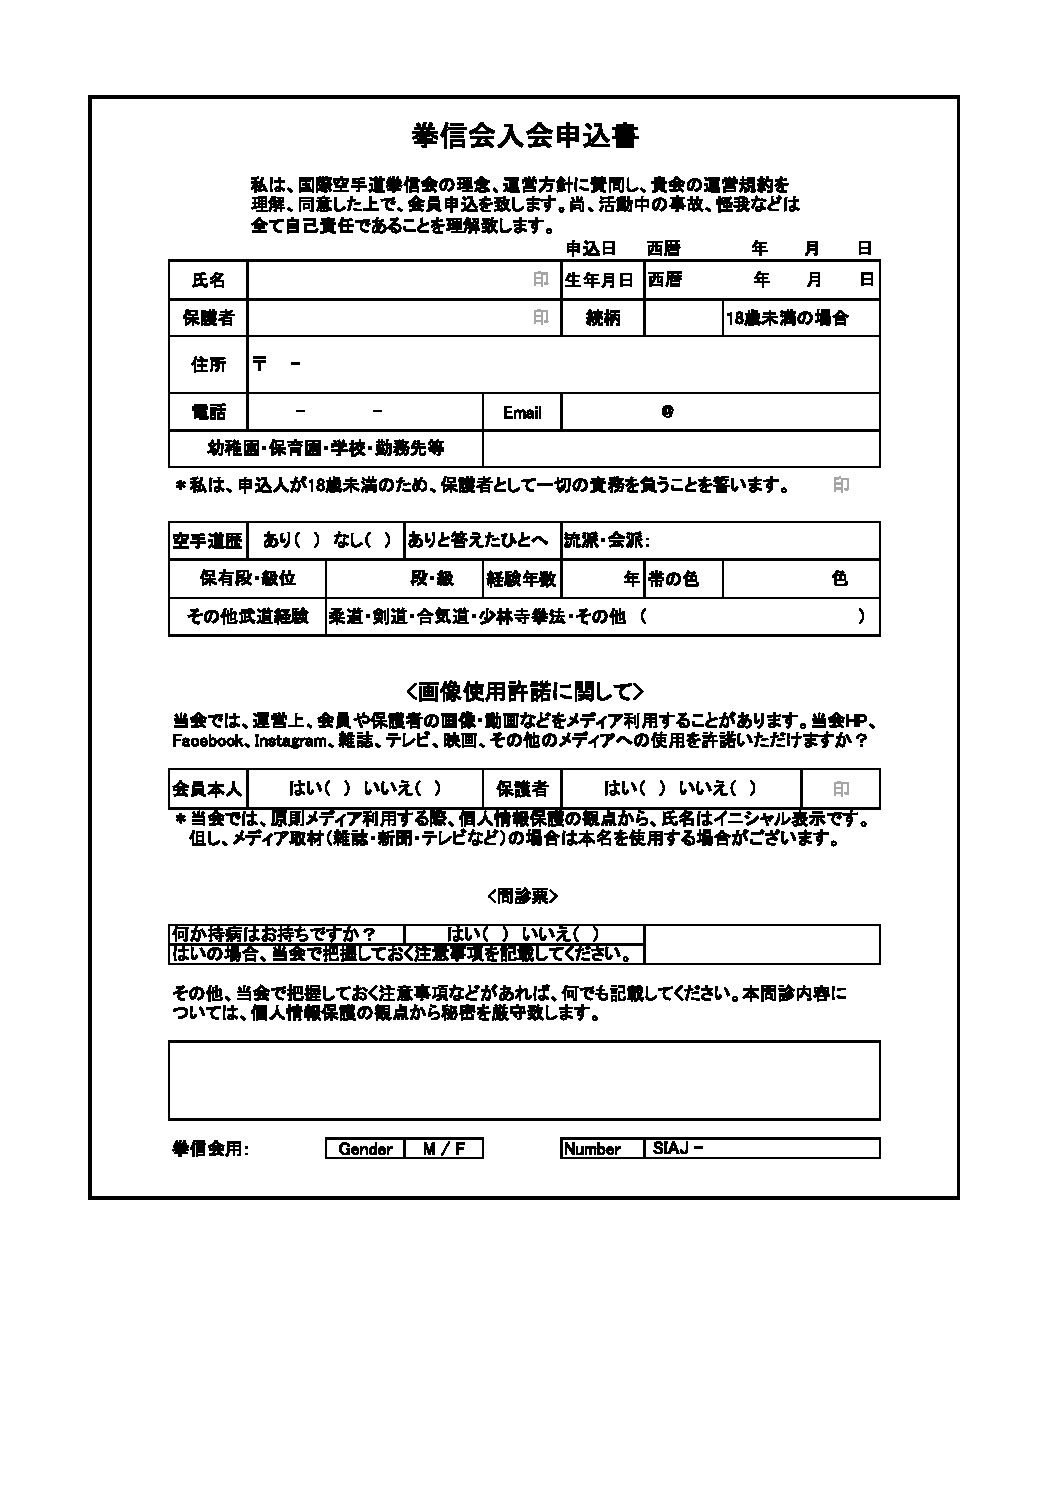 Kenshinkai_Application_2022-3